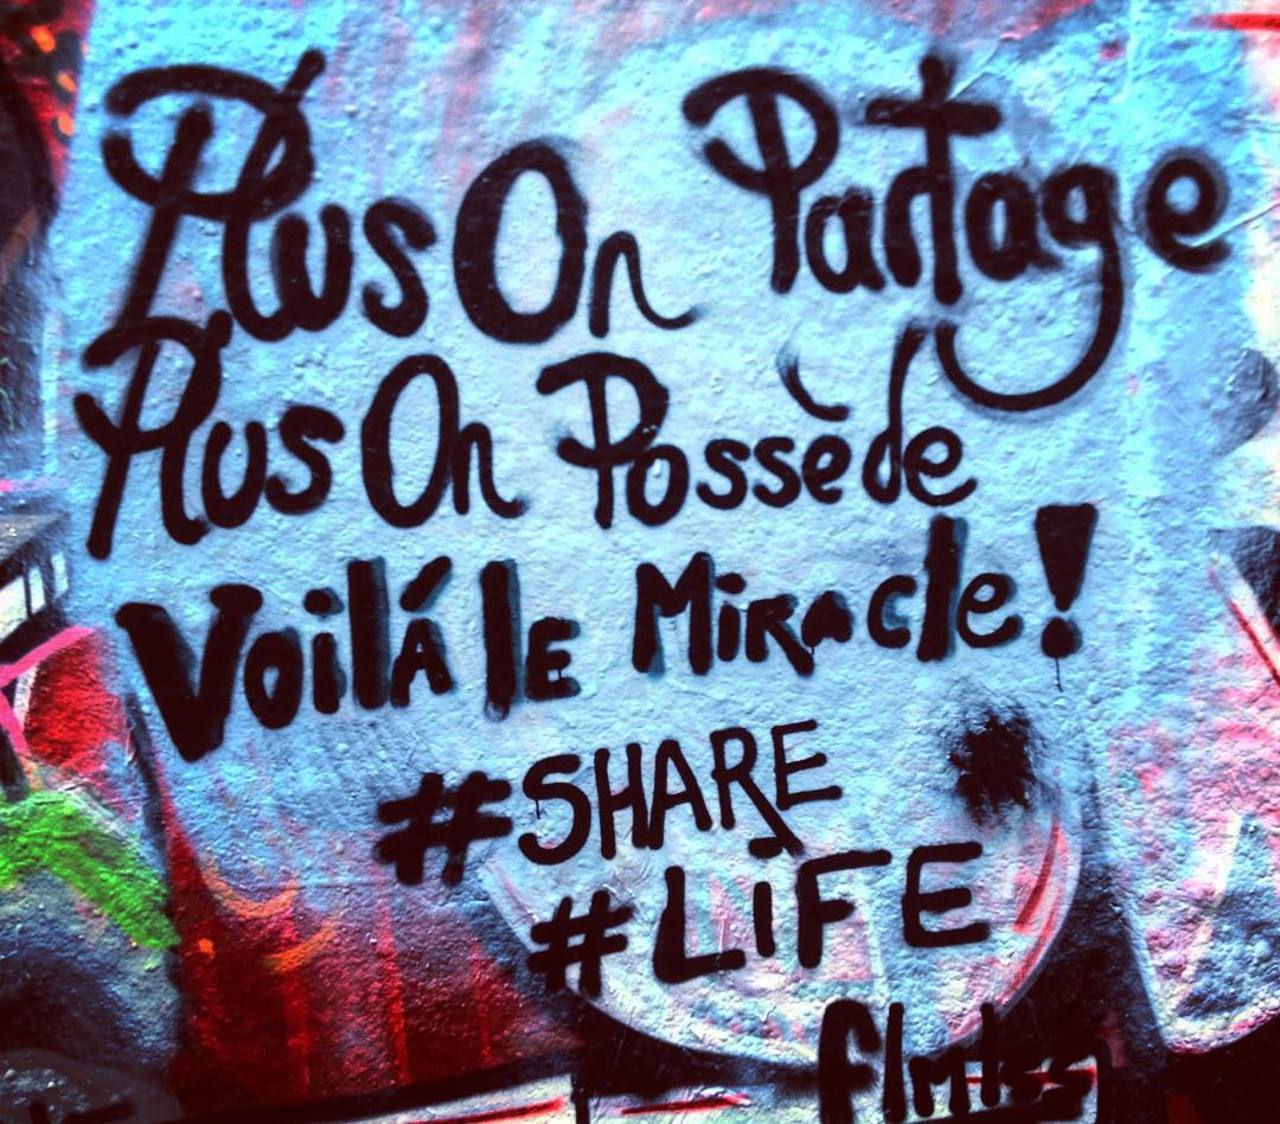 #Paris #graffiti photo by @stefetlinda http://ift.tt/1QFaJsi #StreetArt http://t.co/SysF7Hlj31